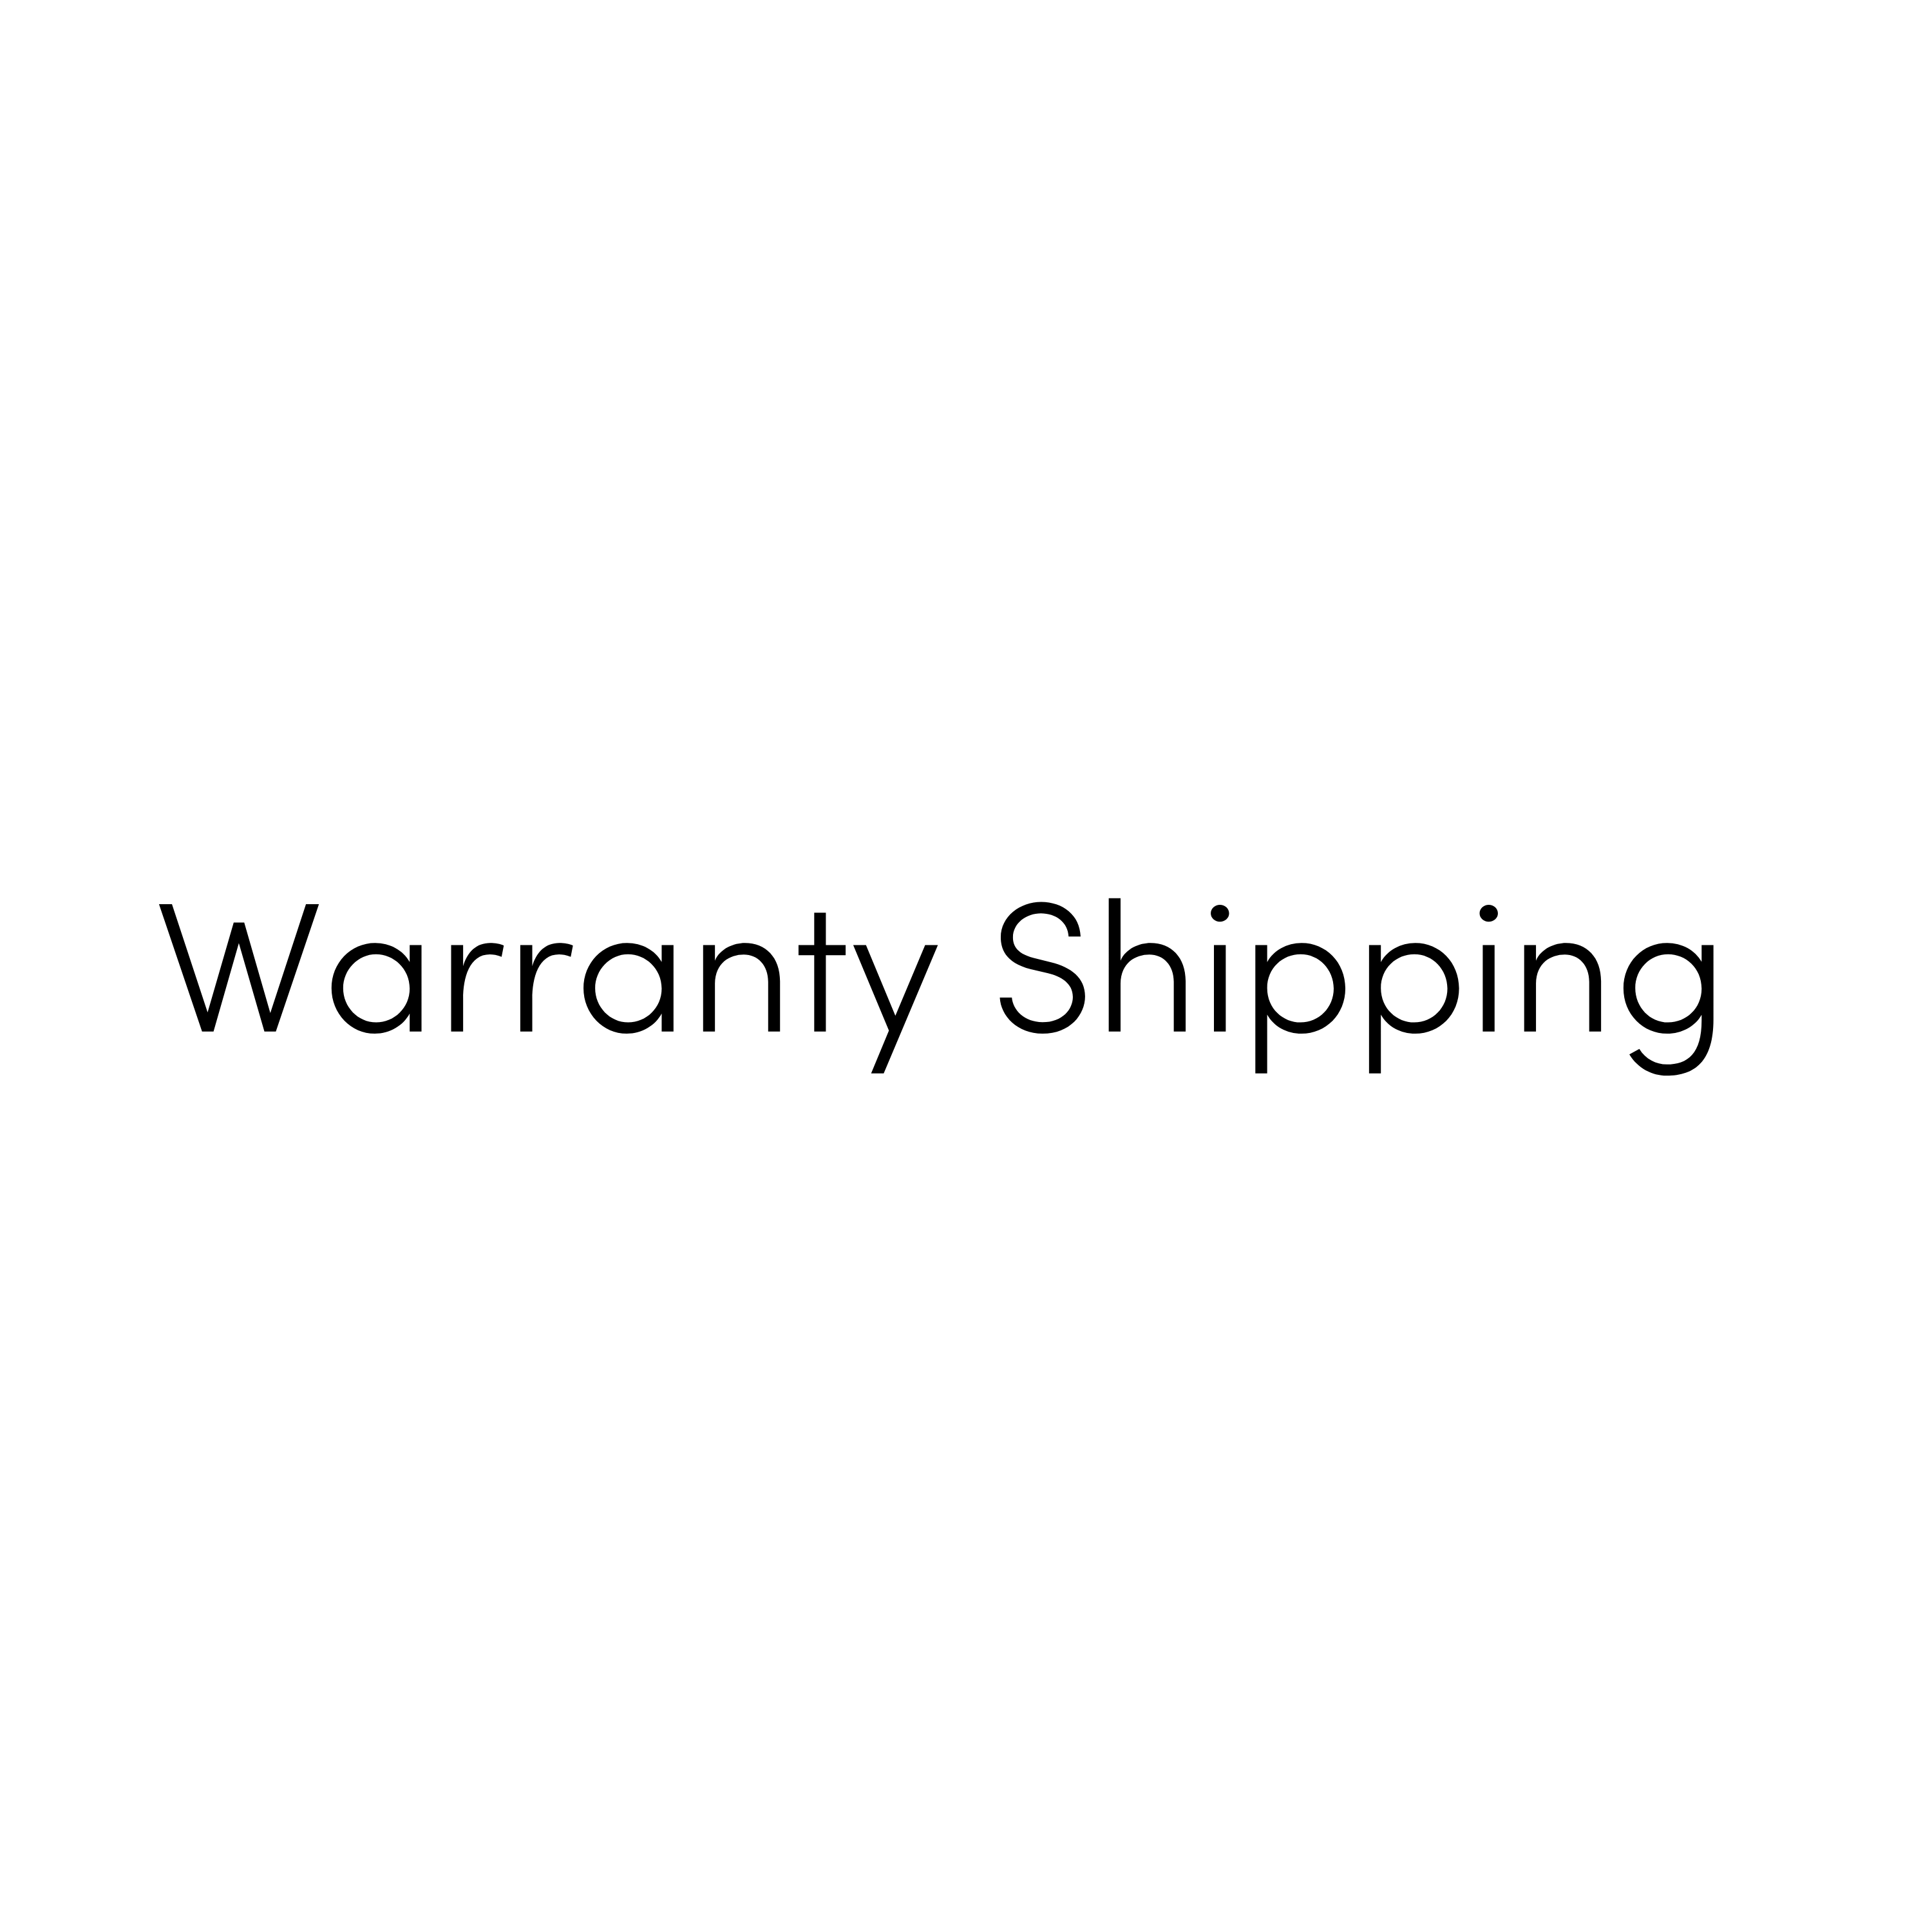 Warranty Shipping